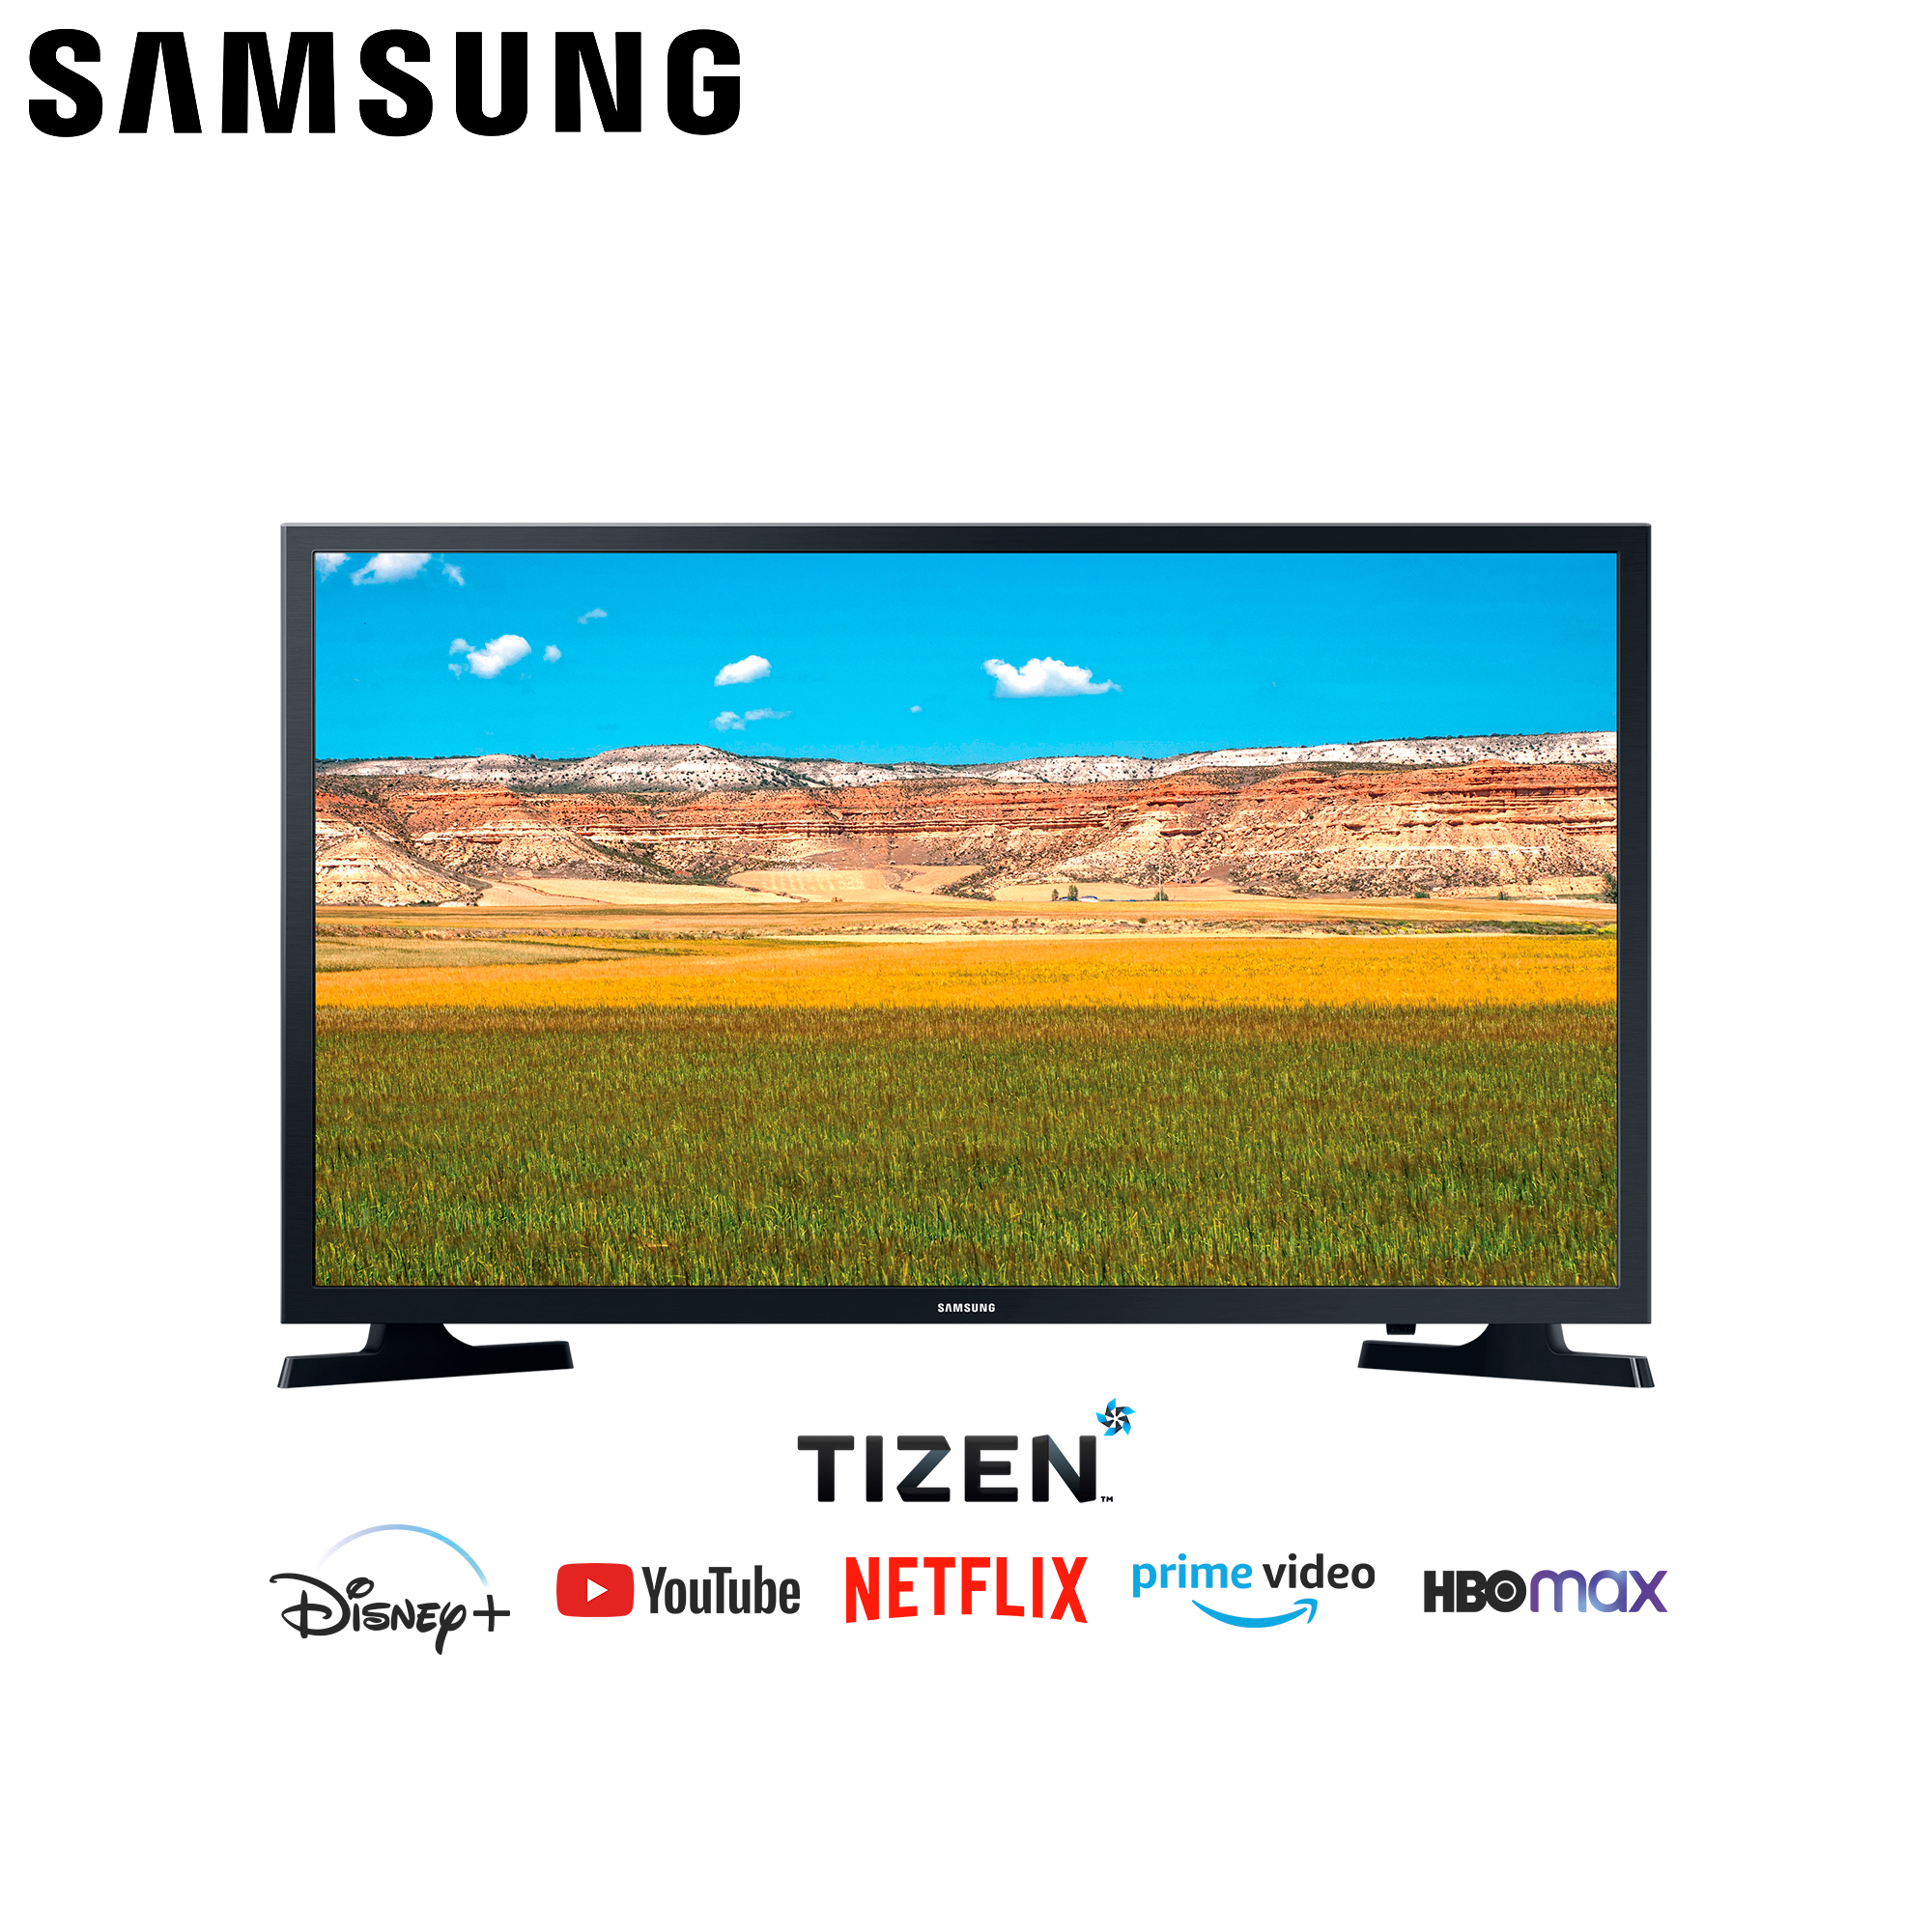 Televisor Smart Samsung de 32 pulgadas UN32T4300